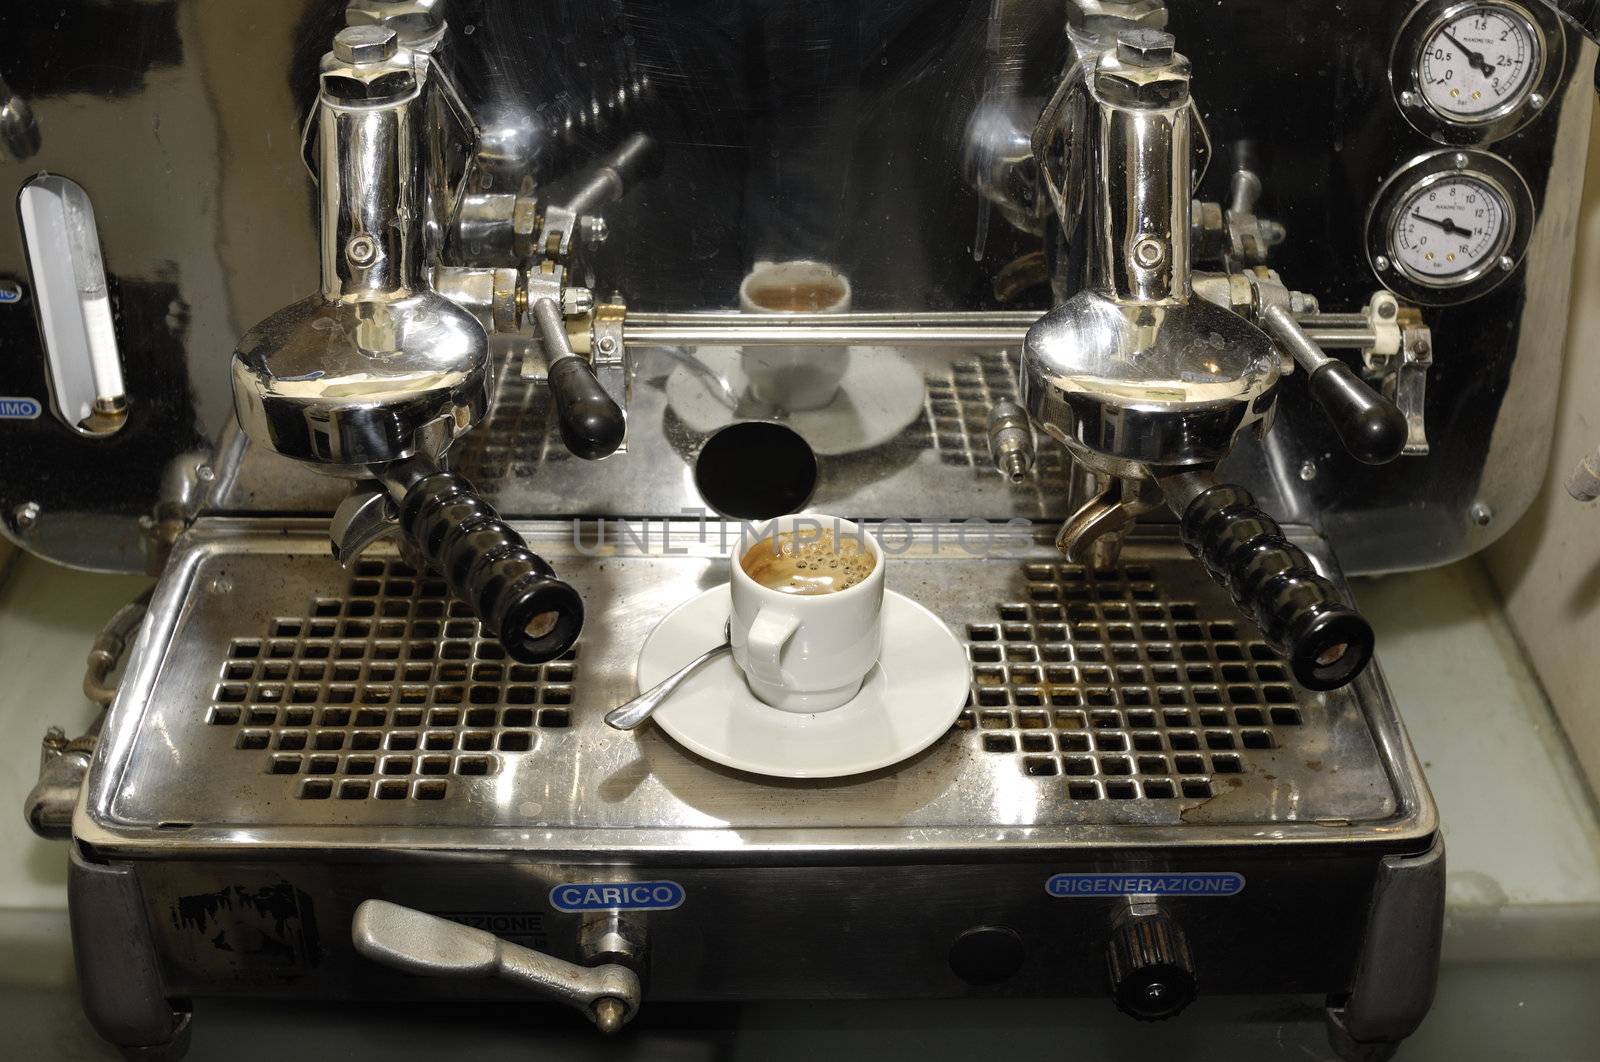 antique espresso machine and espresso coffee cup just made